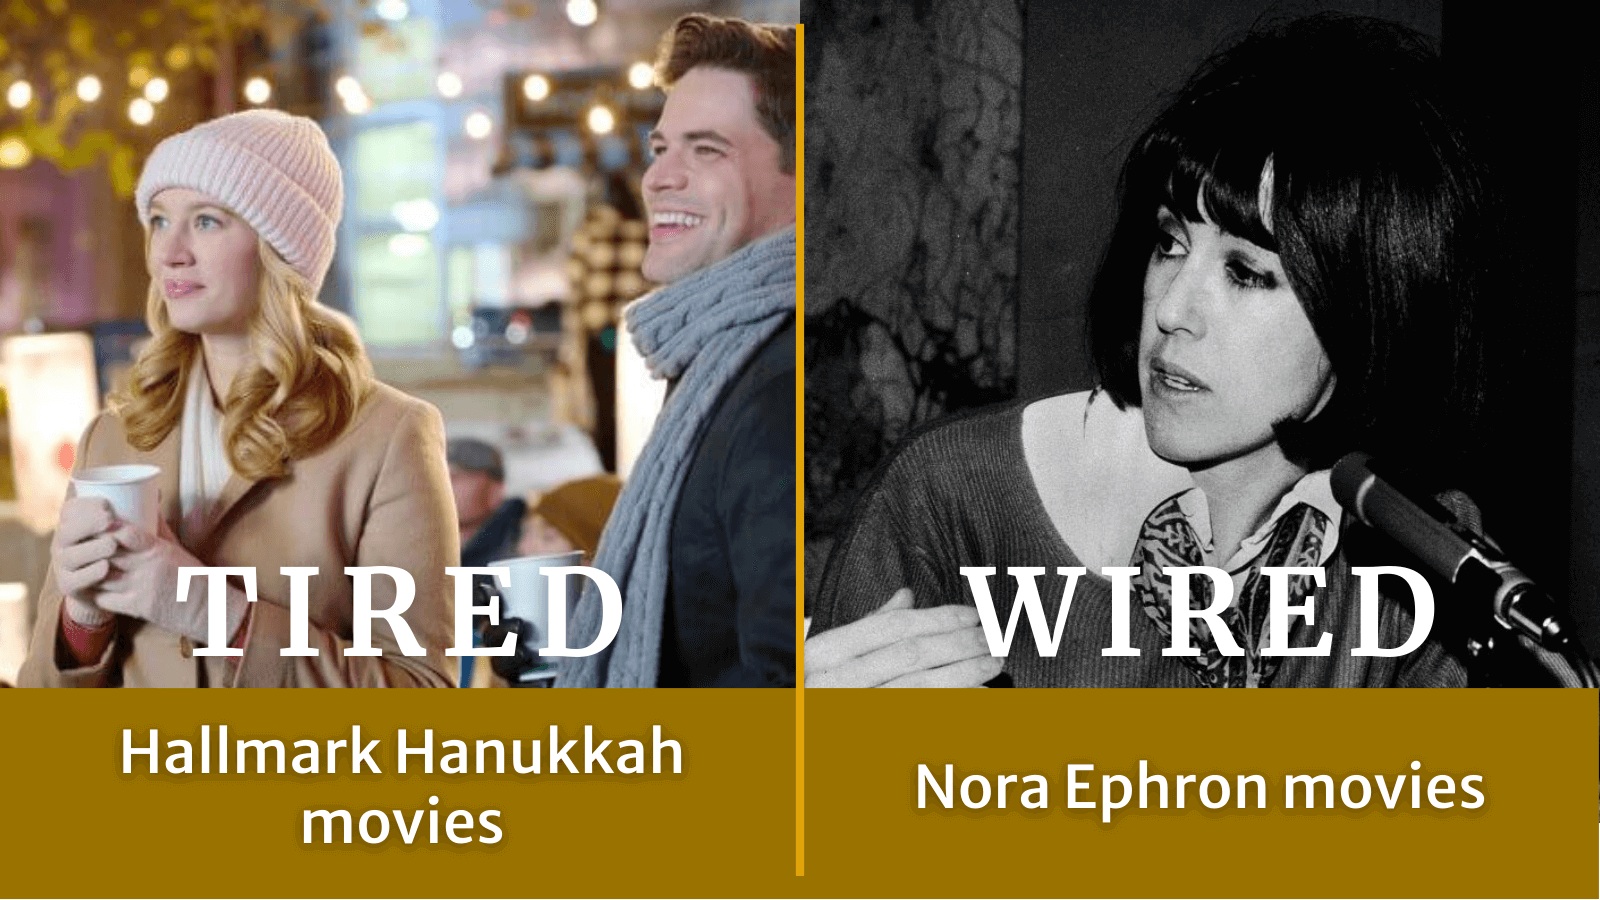 Tired: Hallmark Hanukkah movies. Wired: Nora Ephron movies.